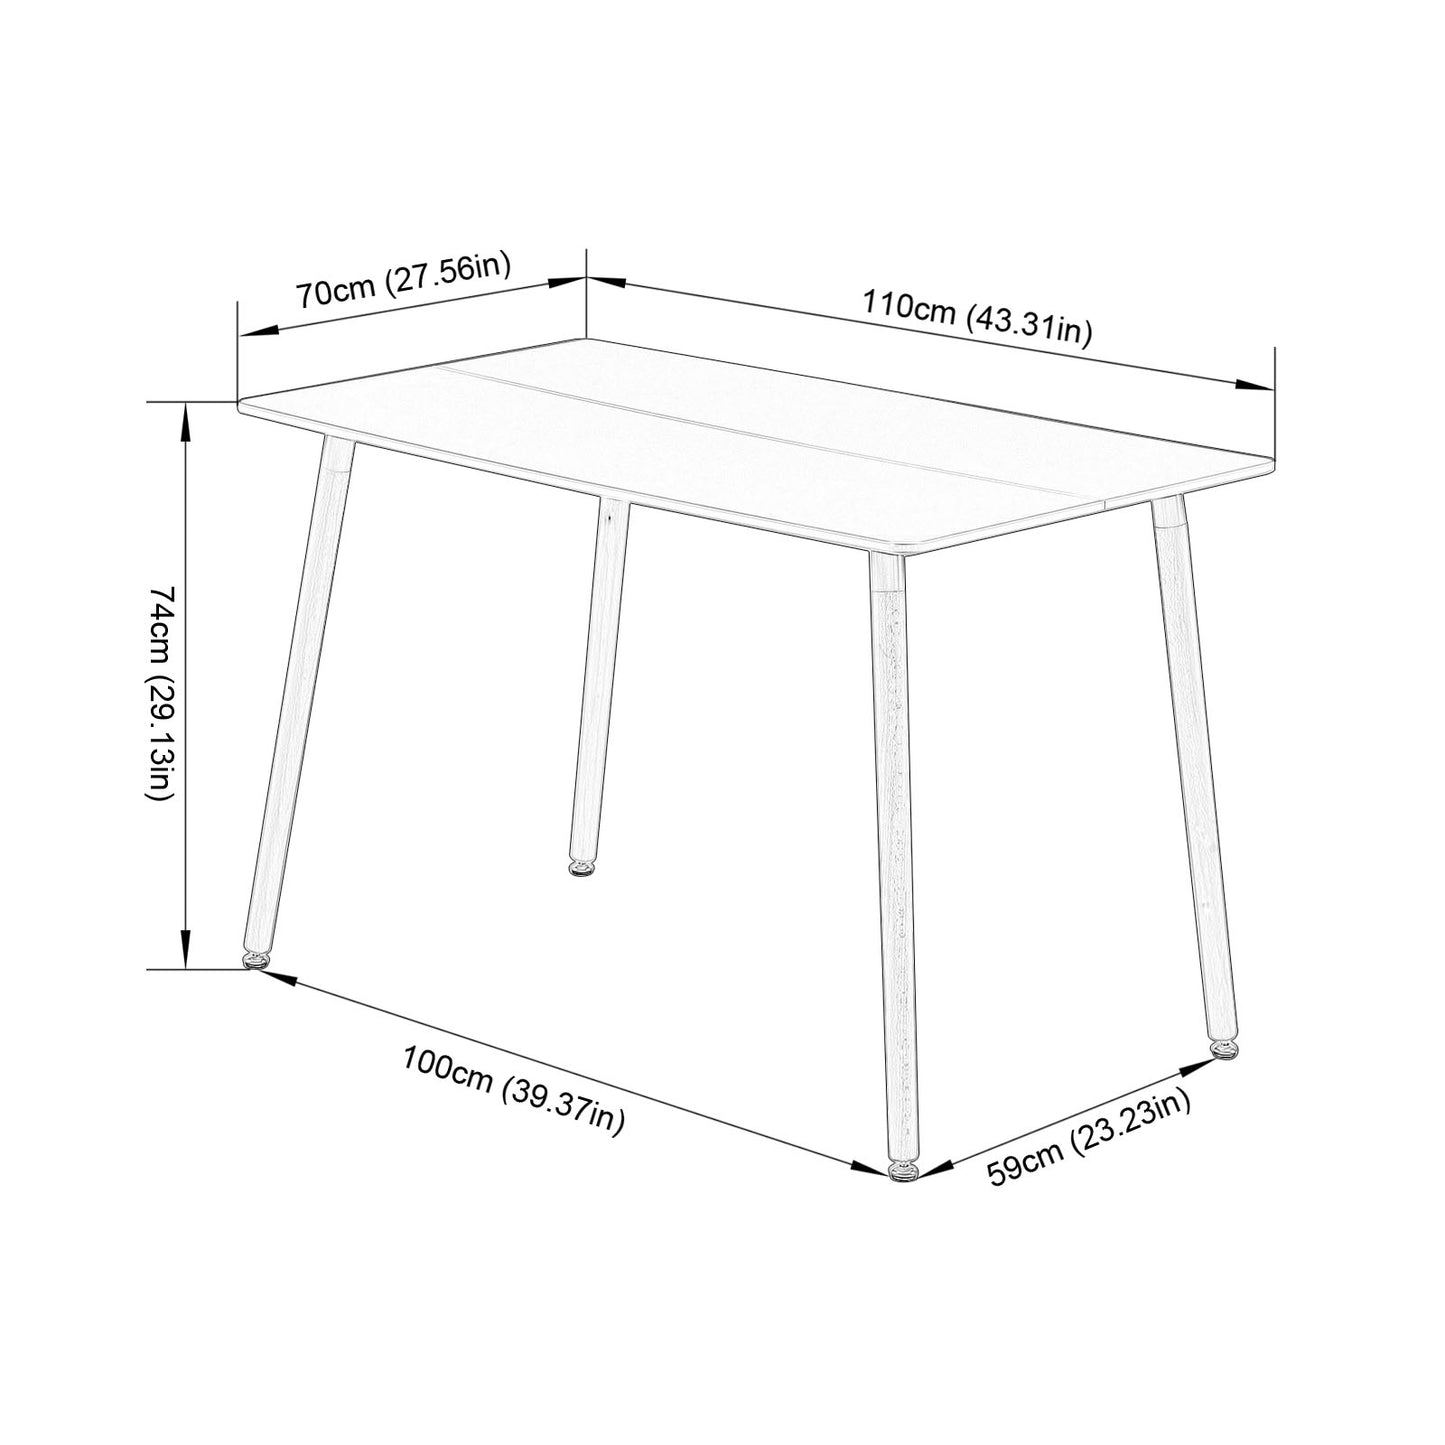 SAGE Scandinavian-Inspired Rectangular Dining Table